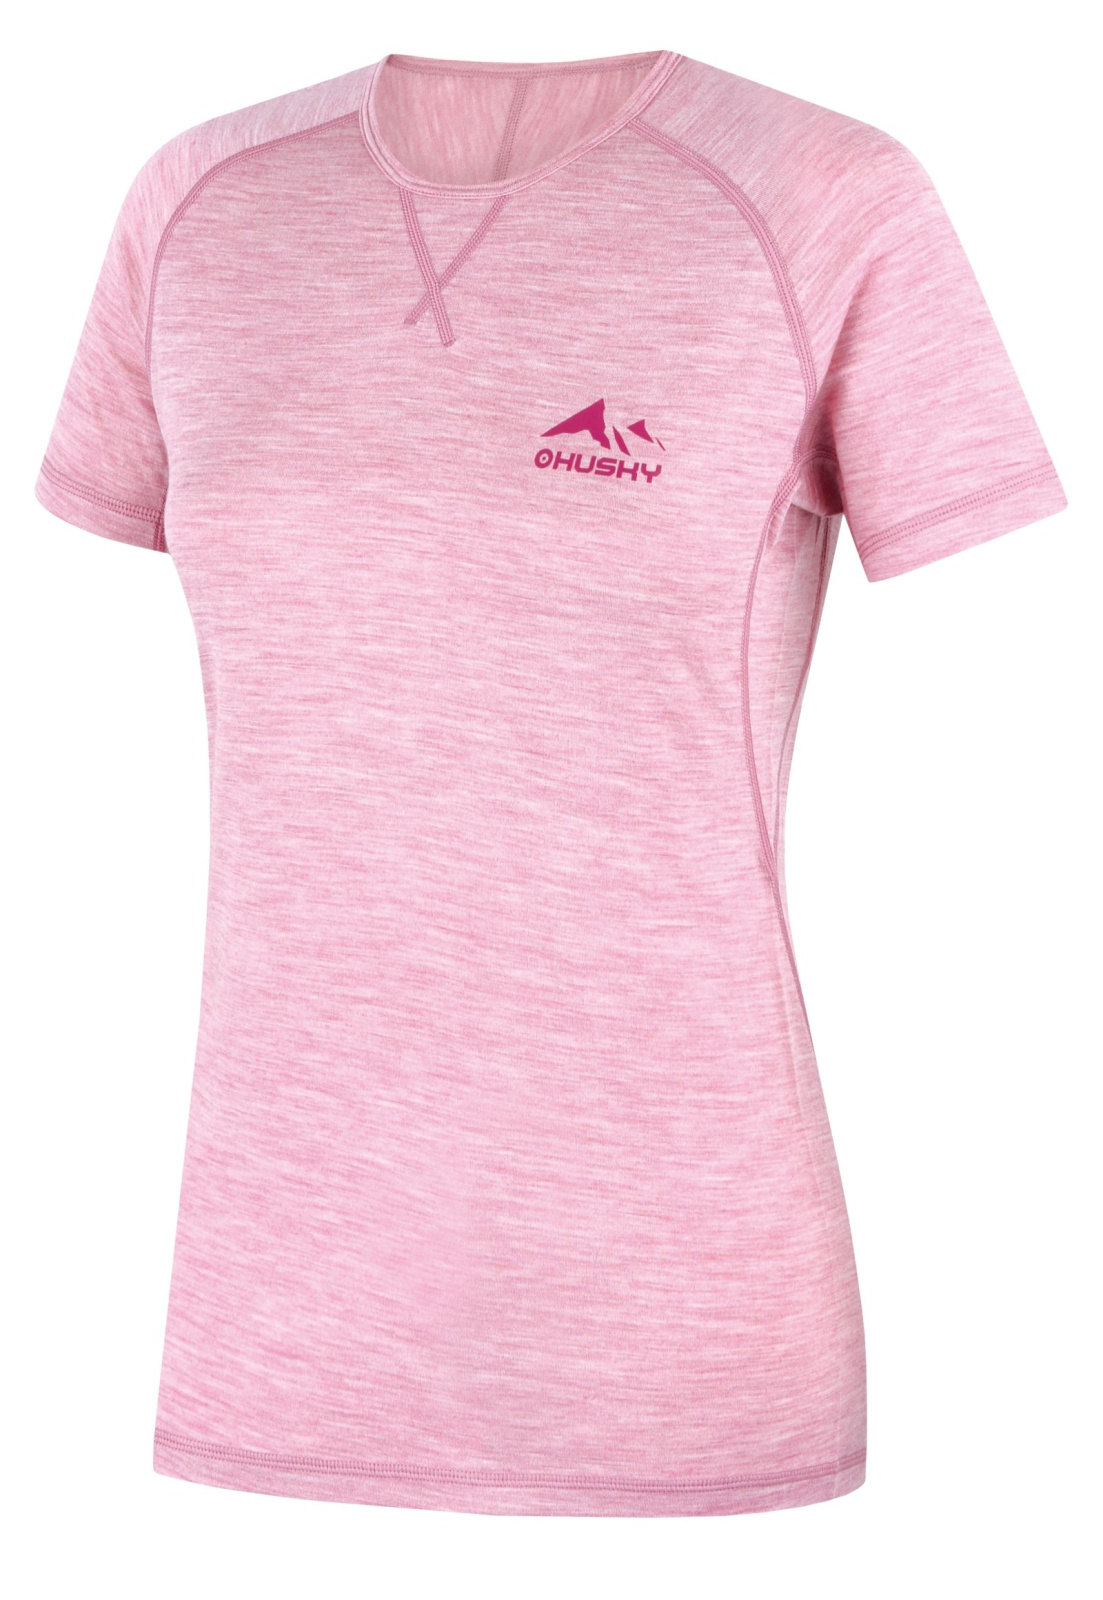 Husky  Mersa L faded pink, XL Merino termoprádlo tričko